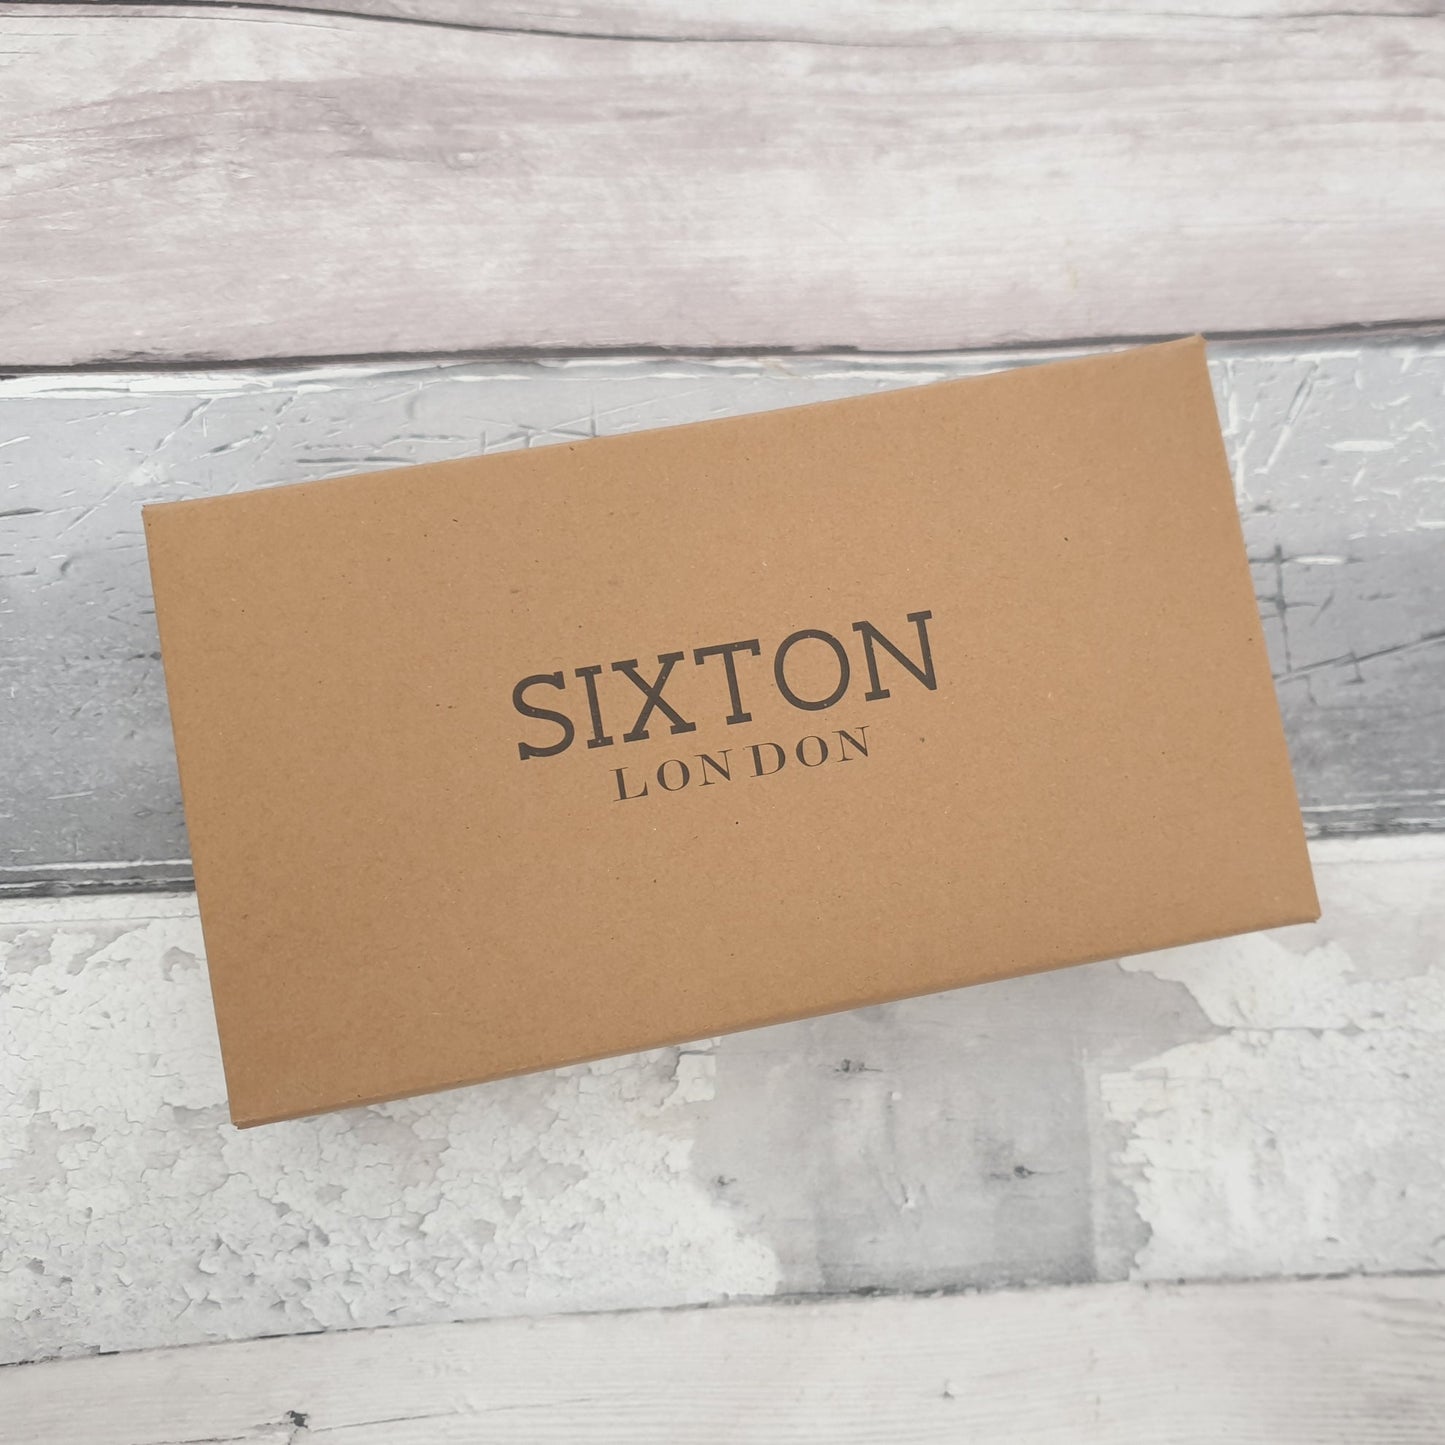 Gift Box with logo "Sixton London".